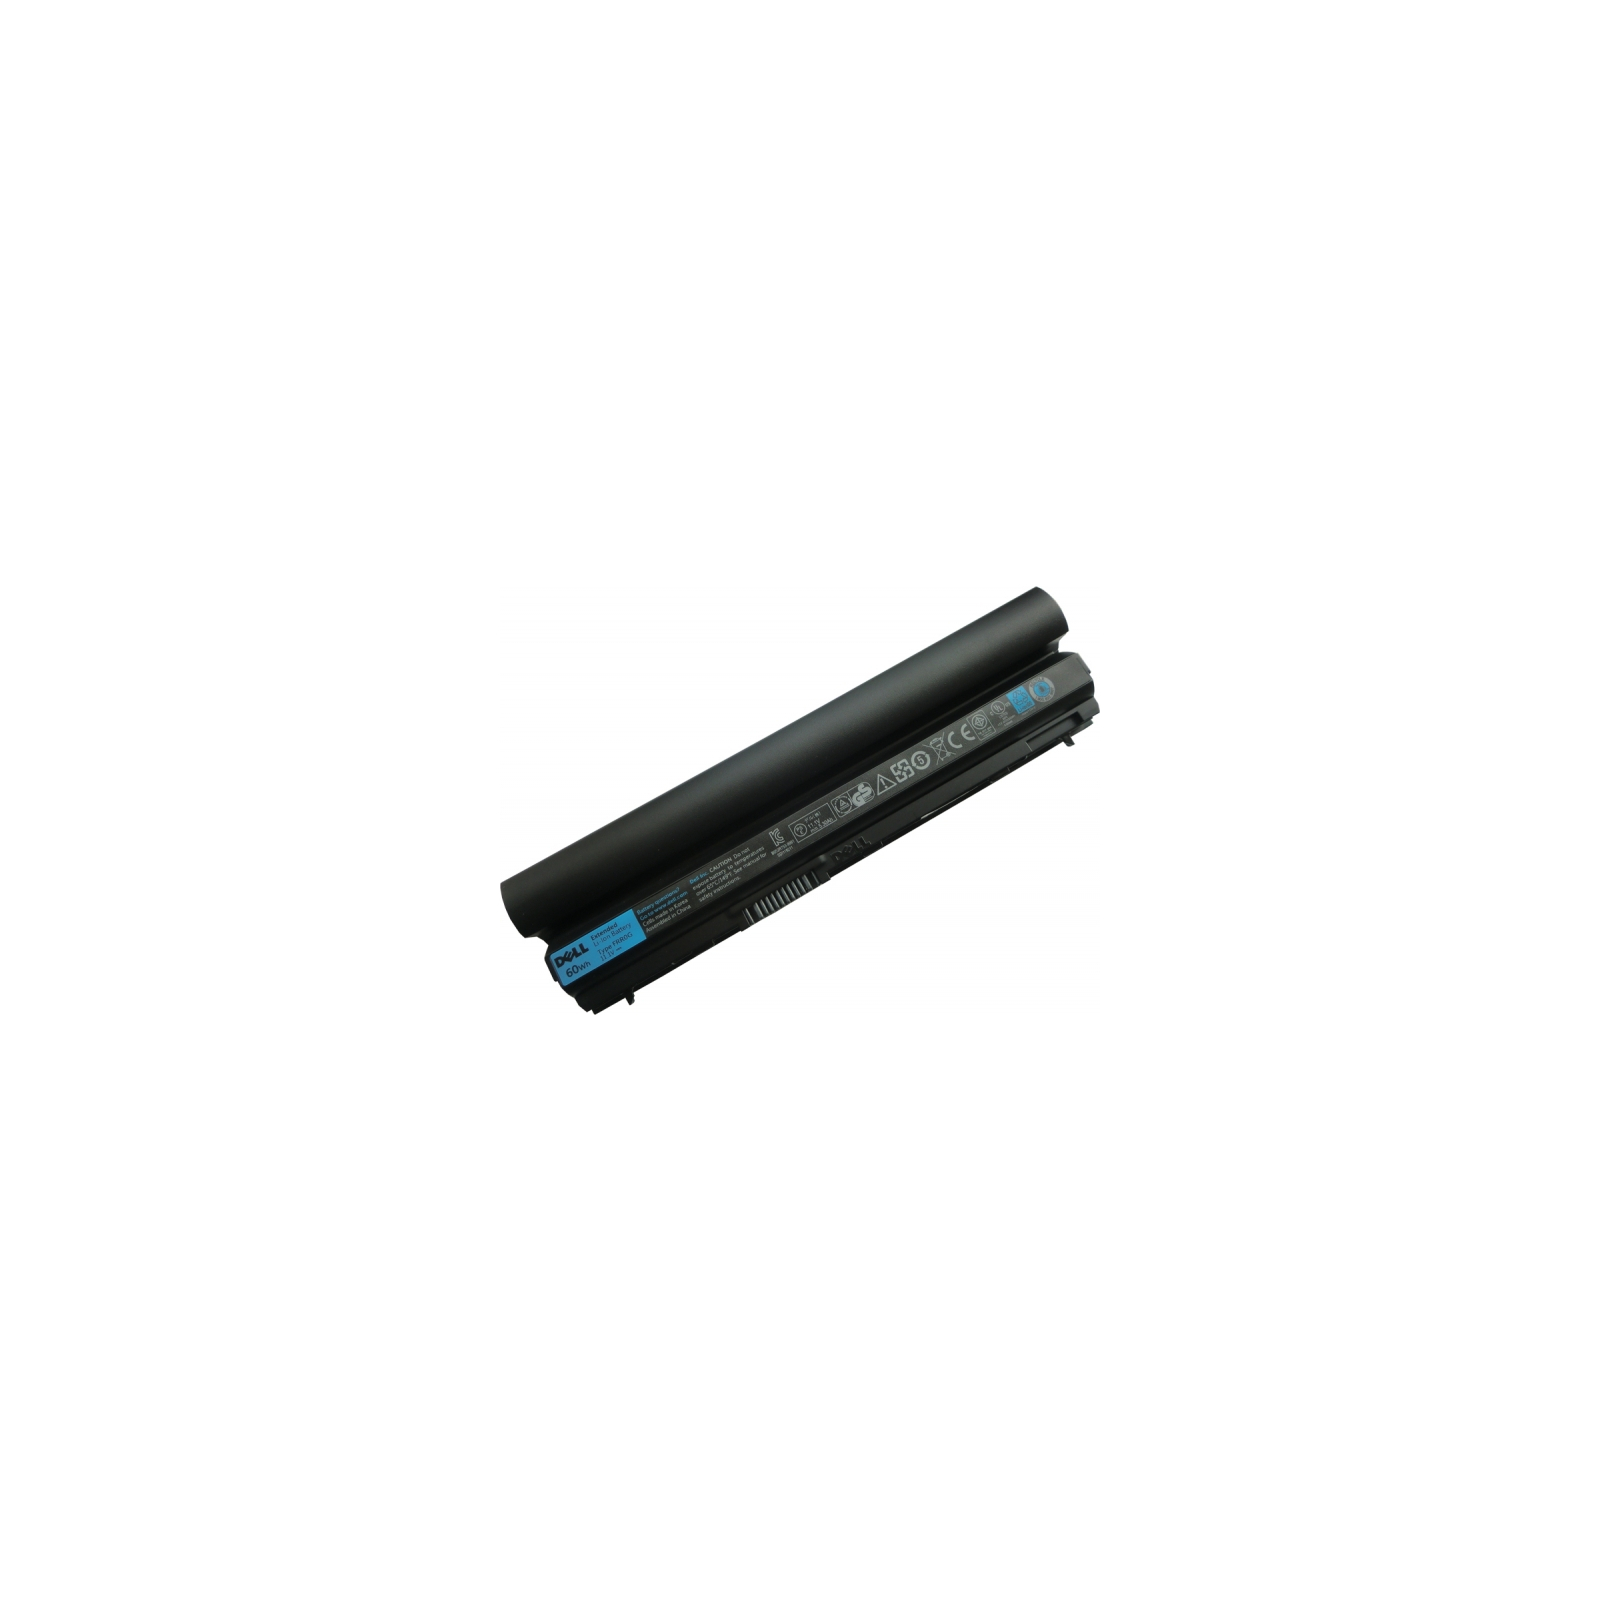 Аккумулятор для ноутбука Dell Dell Latitude E6230 FRR0G 5200mAh (60Wh) 6cell 11.1V Li-ion (A41716) изображение 2